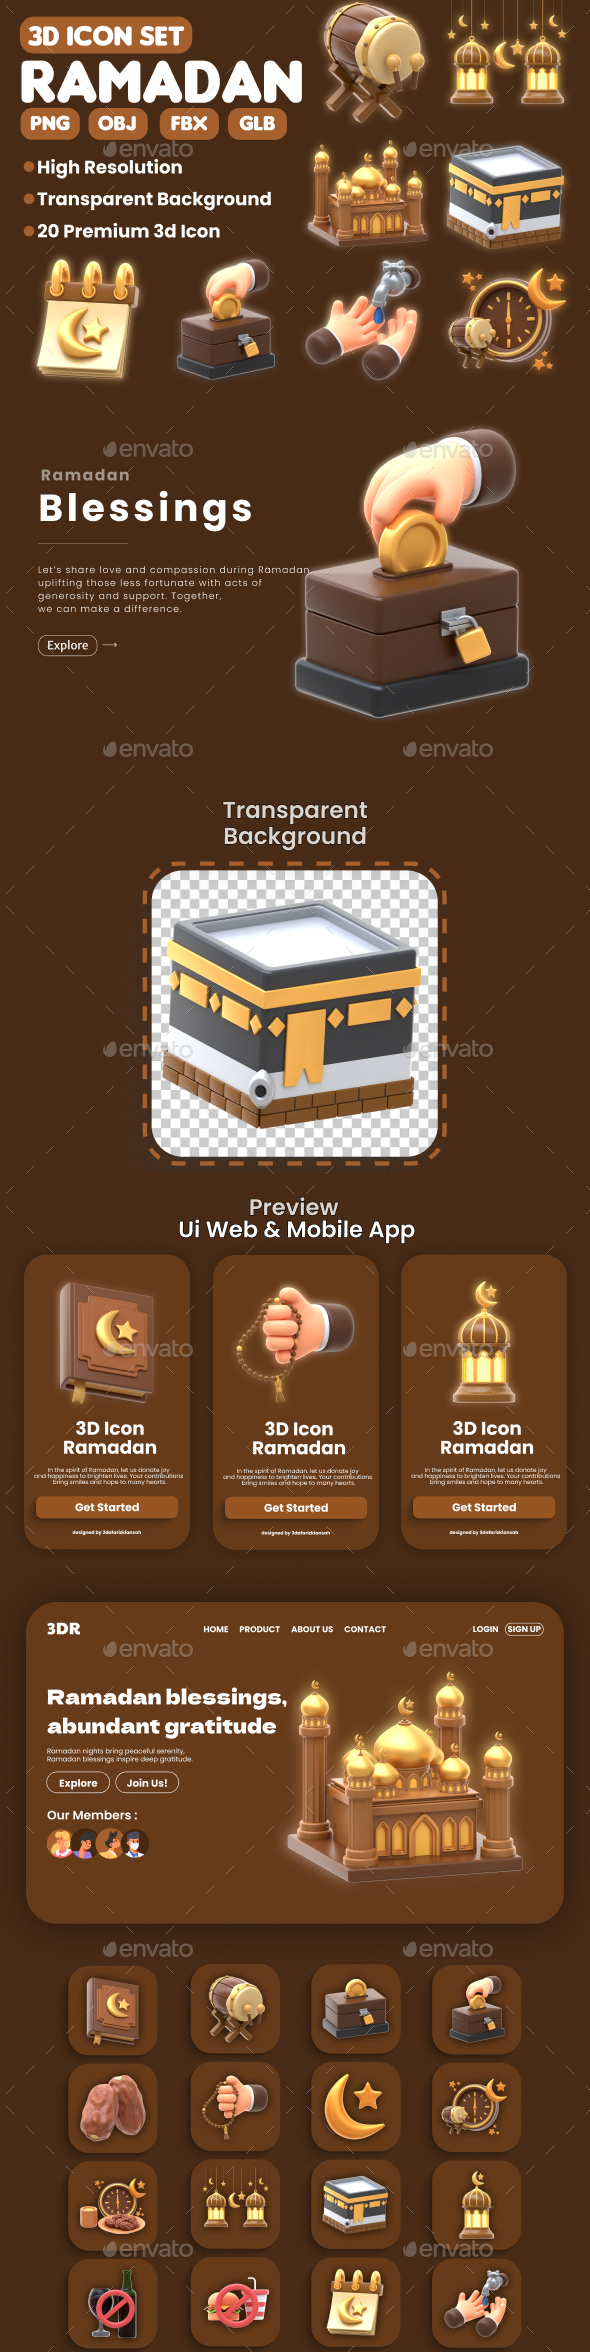 [DOWNLOAD]Ramadan 3D Icons